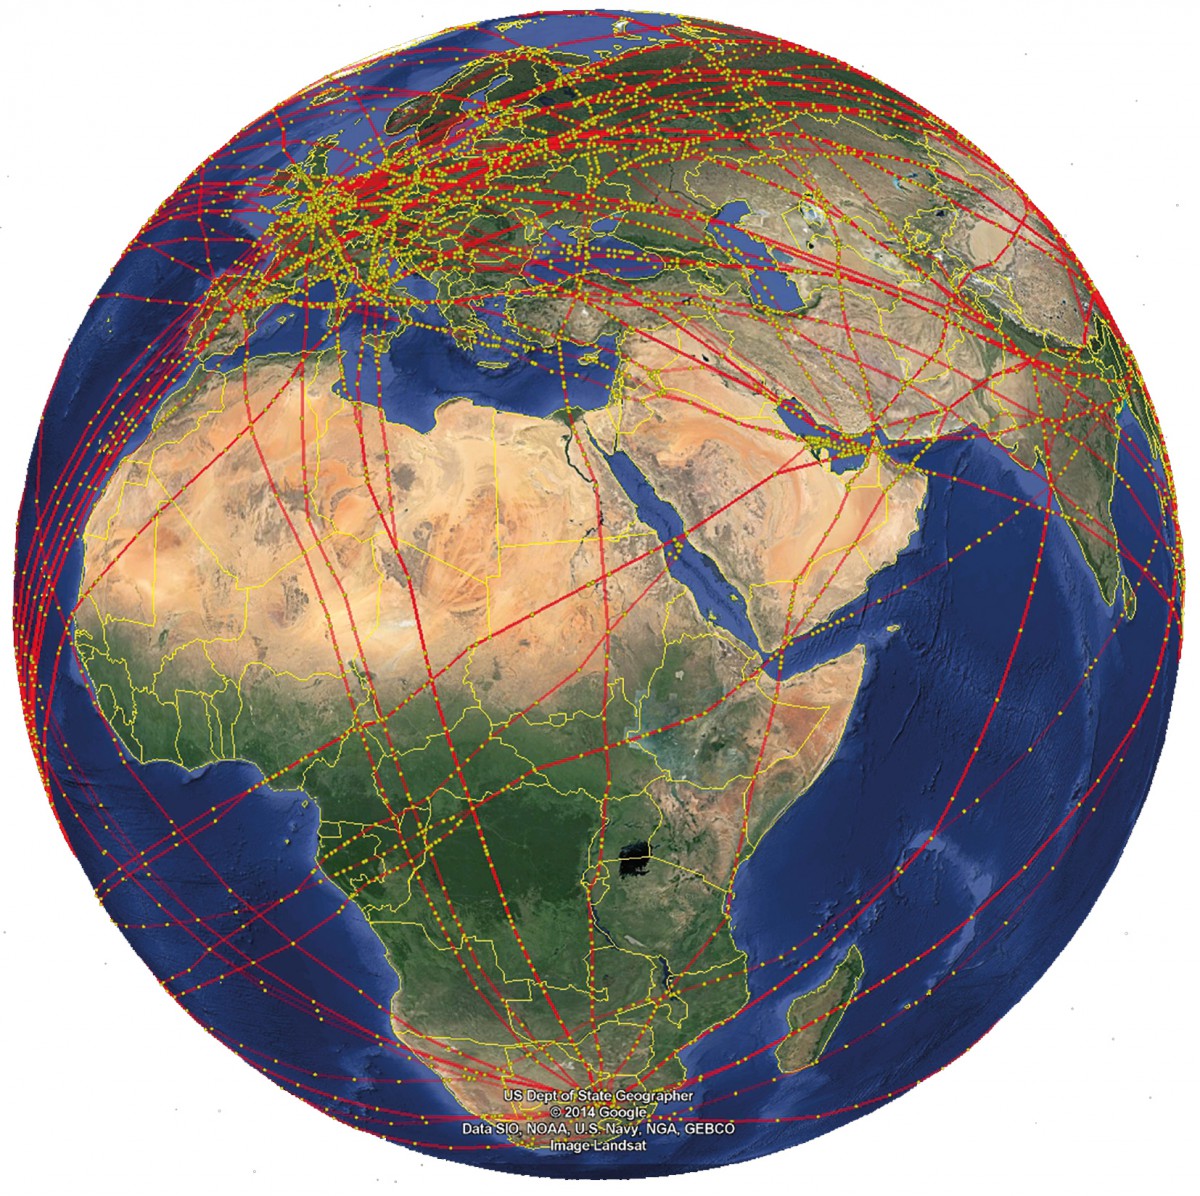 Air traffic network.